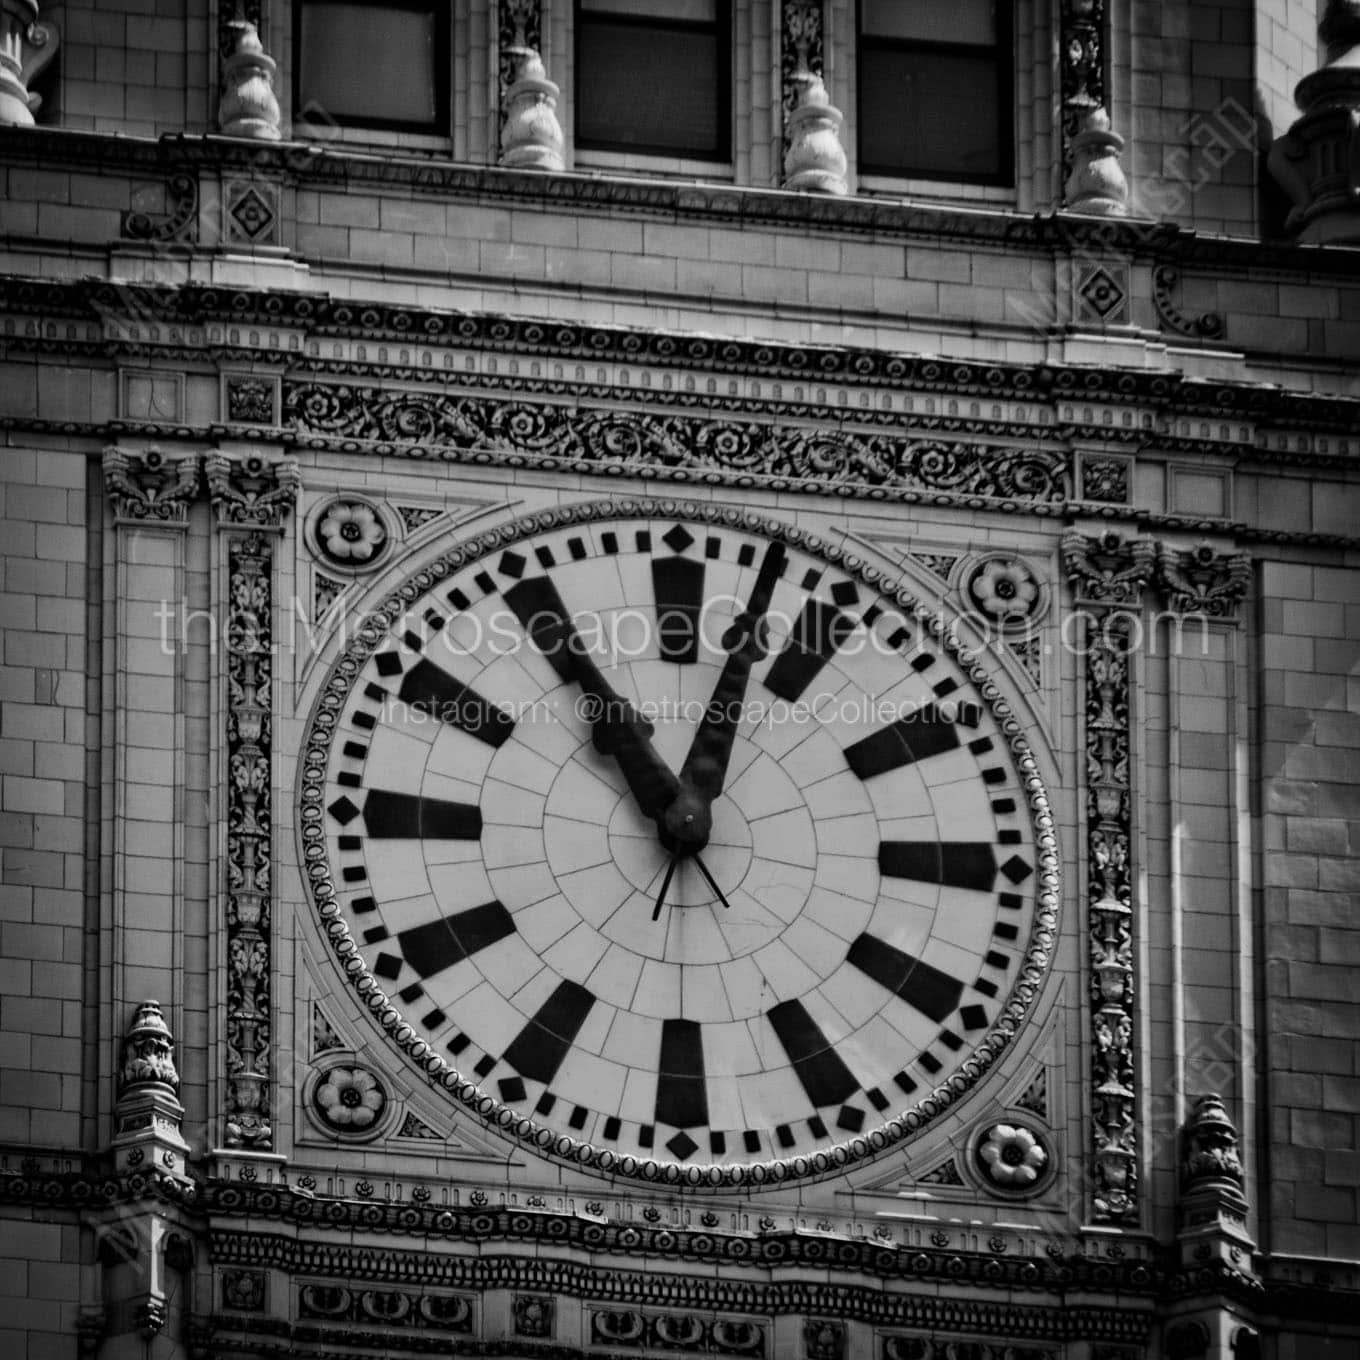 wrigley building clock face Black & White Office Art